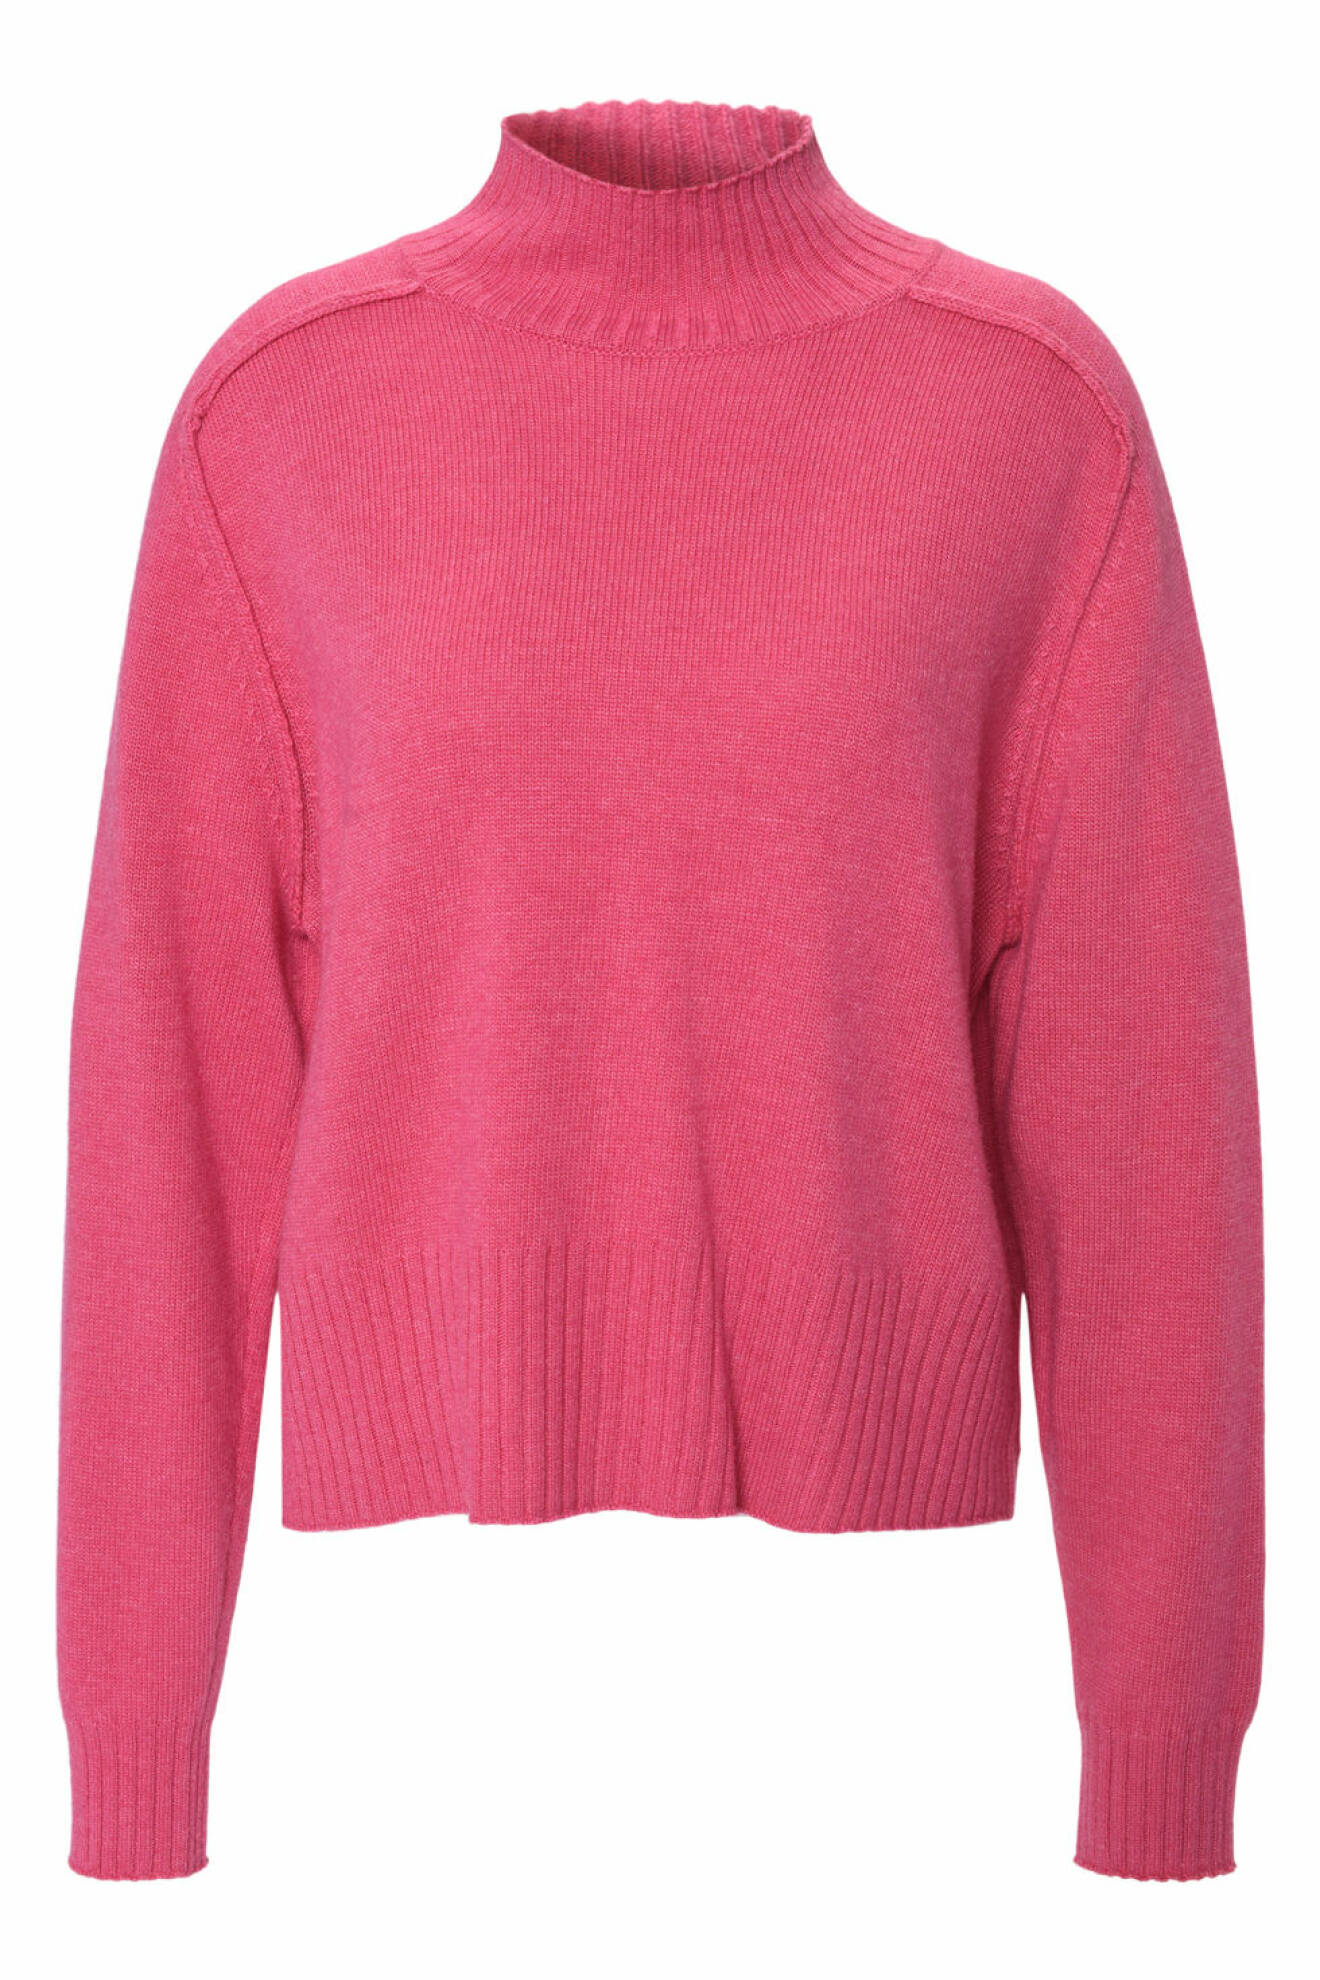 Maria Westerlind x MQ rosa tröja